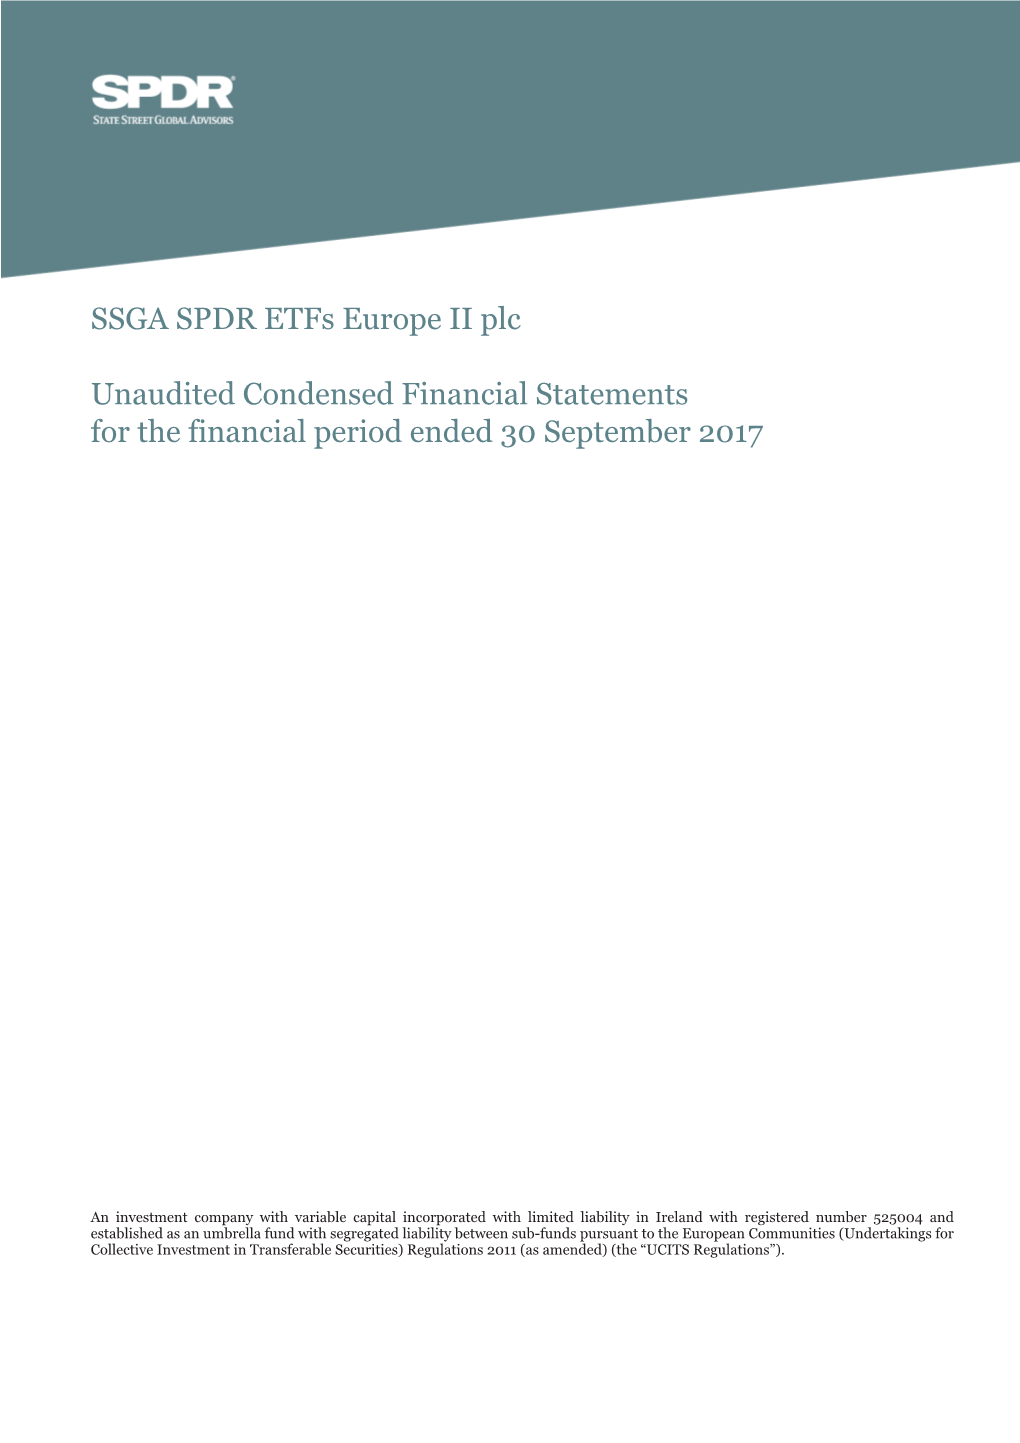 SSGA SPDR Etfs Europe II Plc Unaudited Condensed Financial Statements 2017